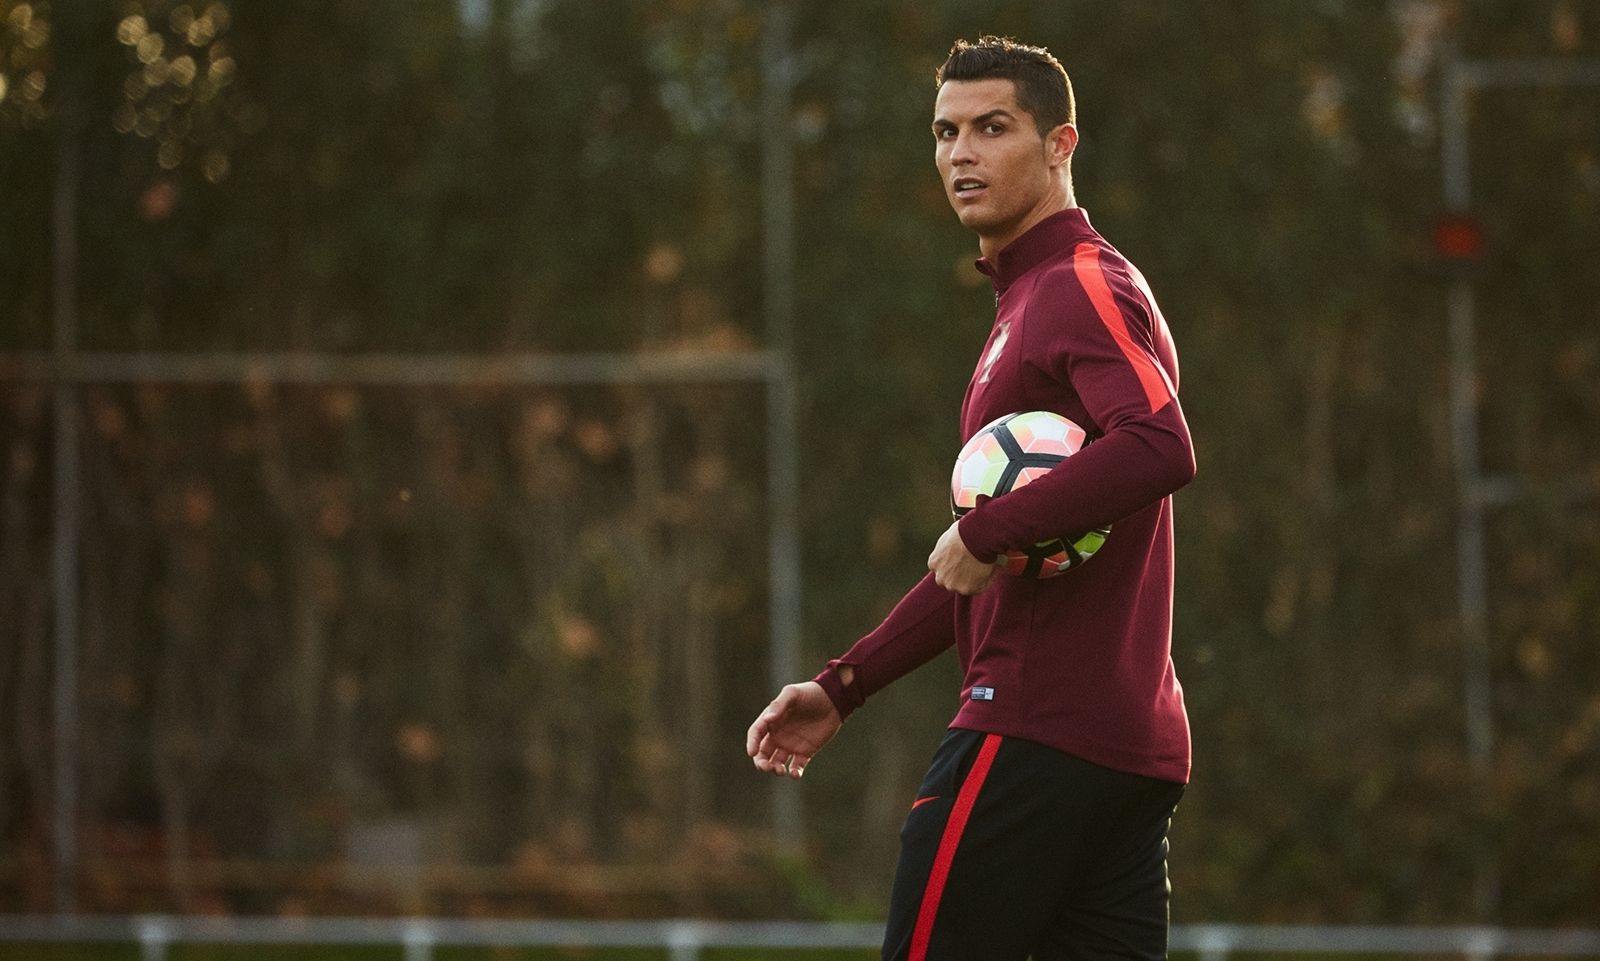 Nike presents Switch' - Cristiano Ronaldo